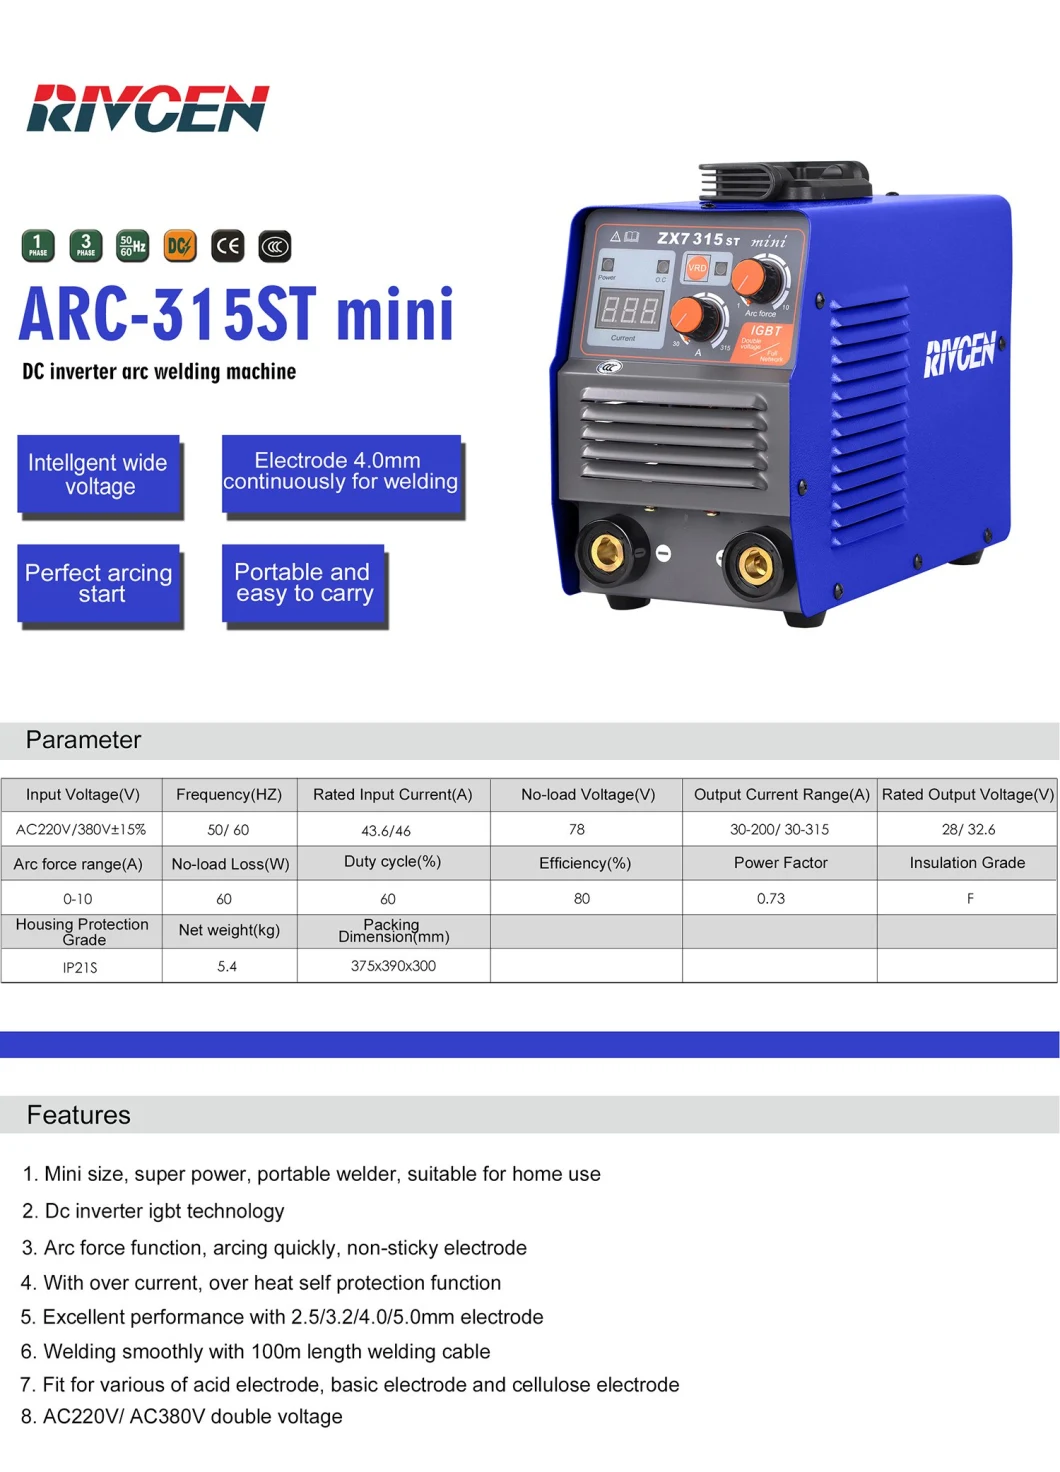 Arc315st Mini Portable DC Inverter Welding Machines, High Efficiency AC220V 380V Dual Voltage Inverter Welding Machine for Civil Use